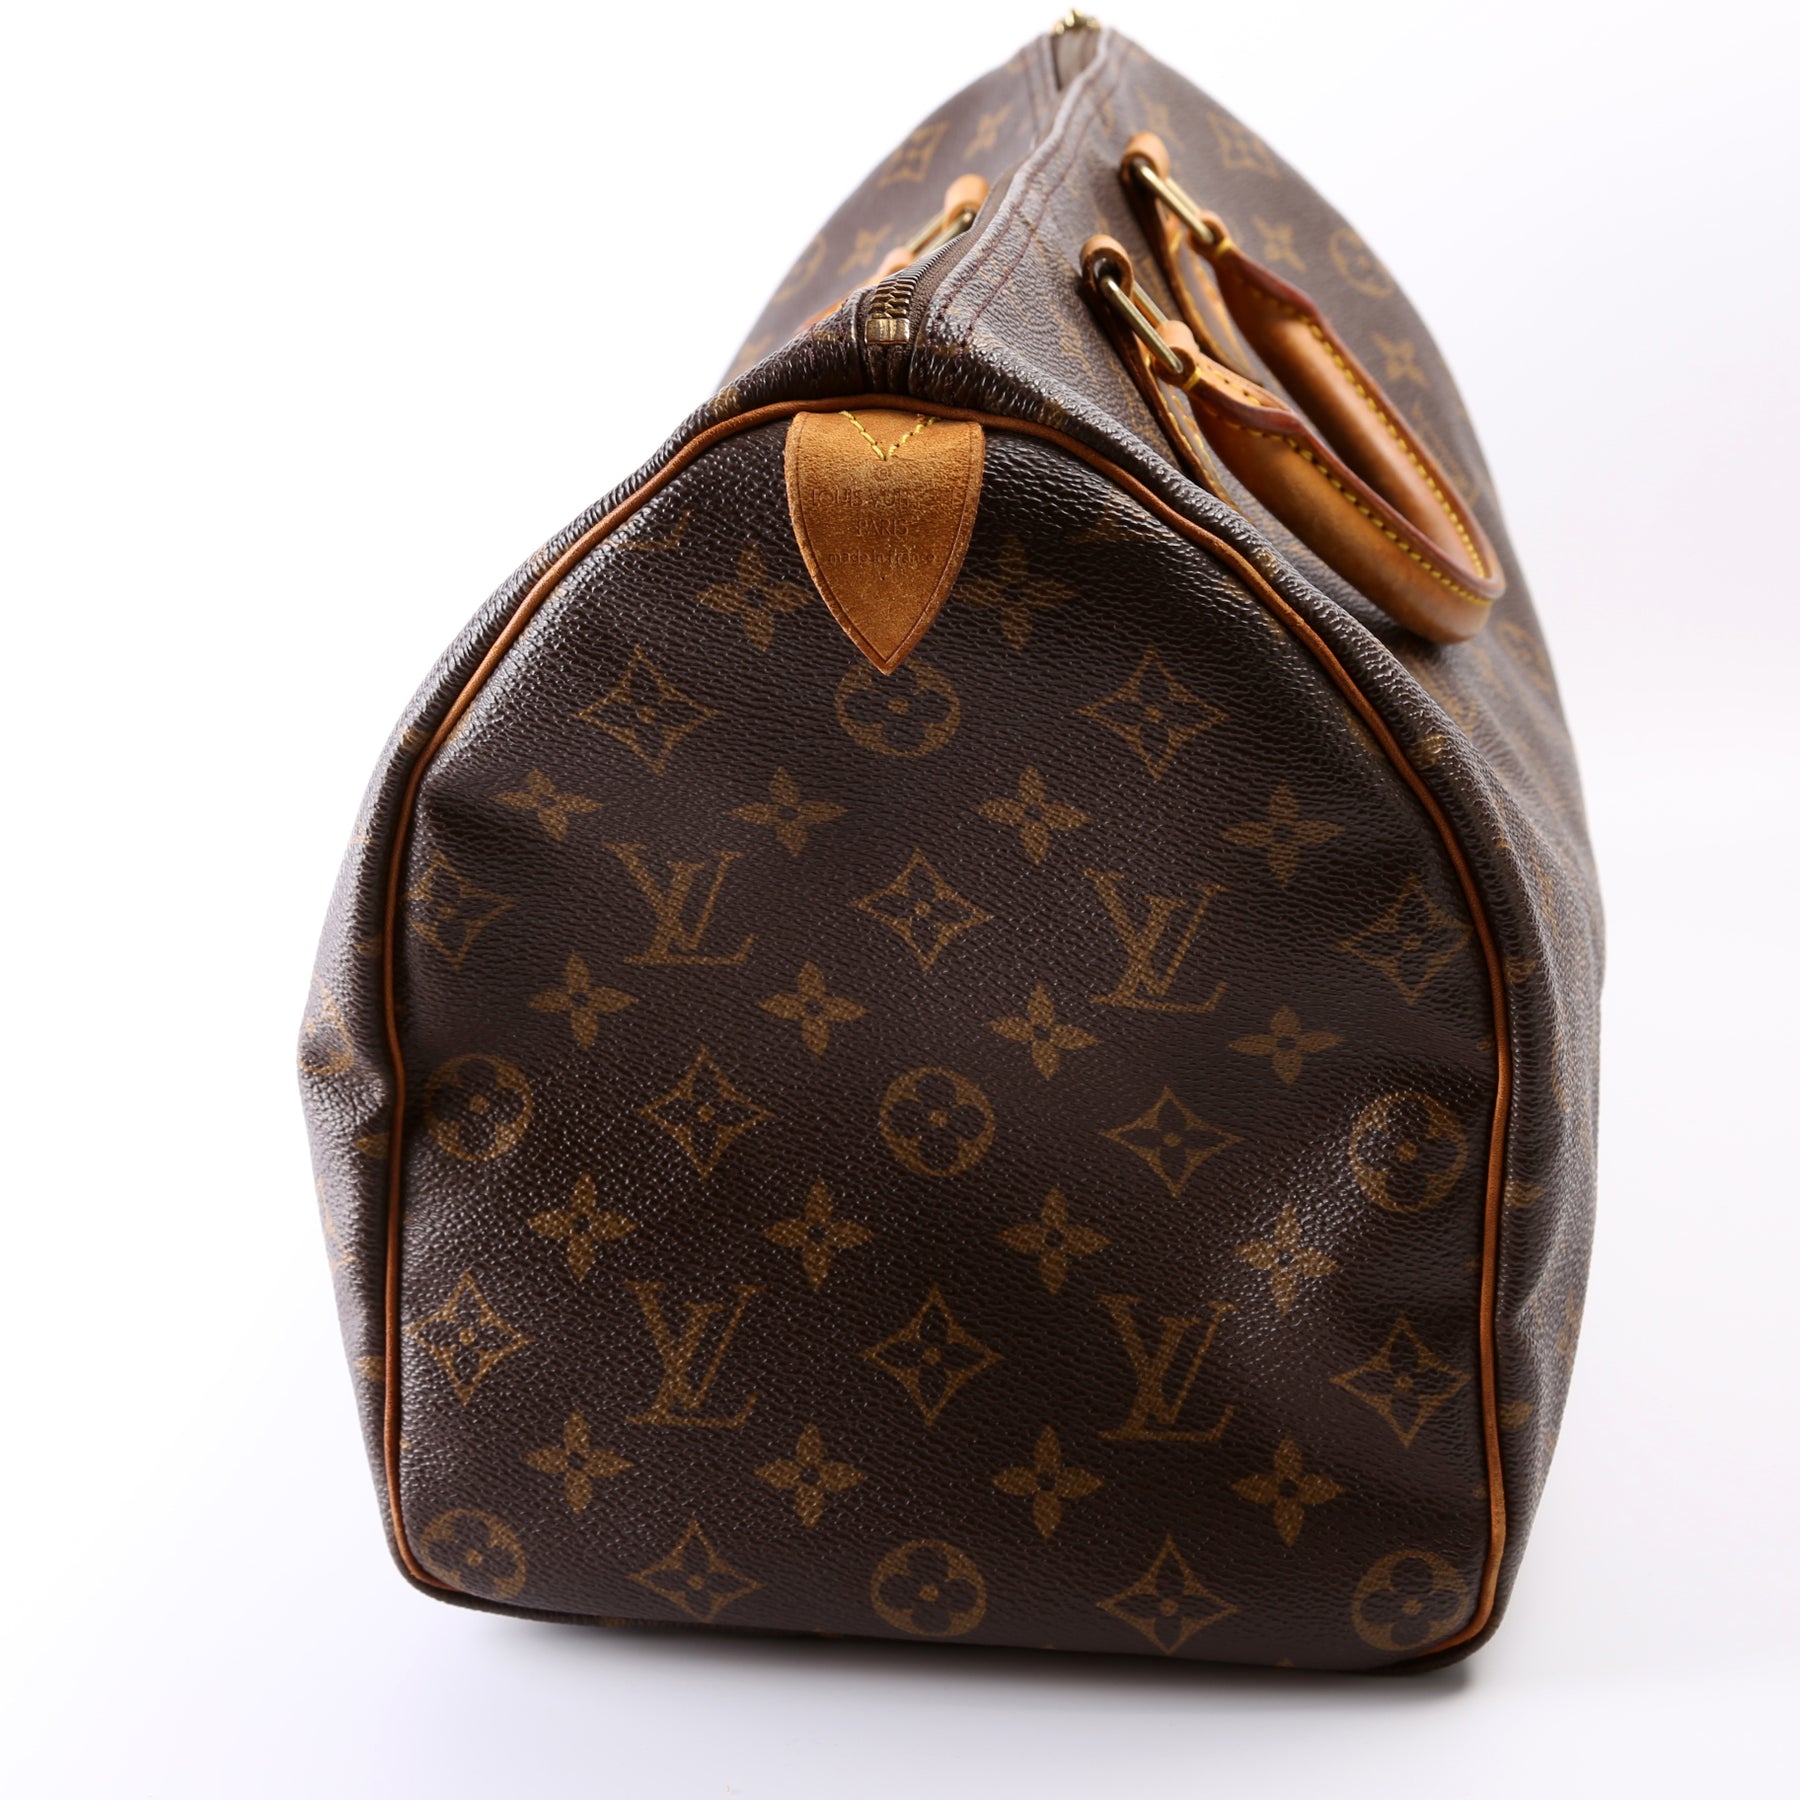 Louis Vuitton 1997 pre-owned Speedy 35 handbag, Brown